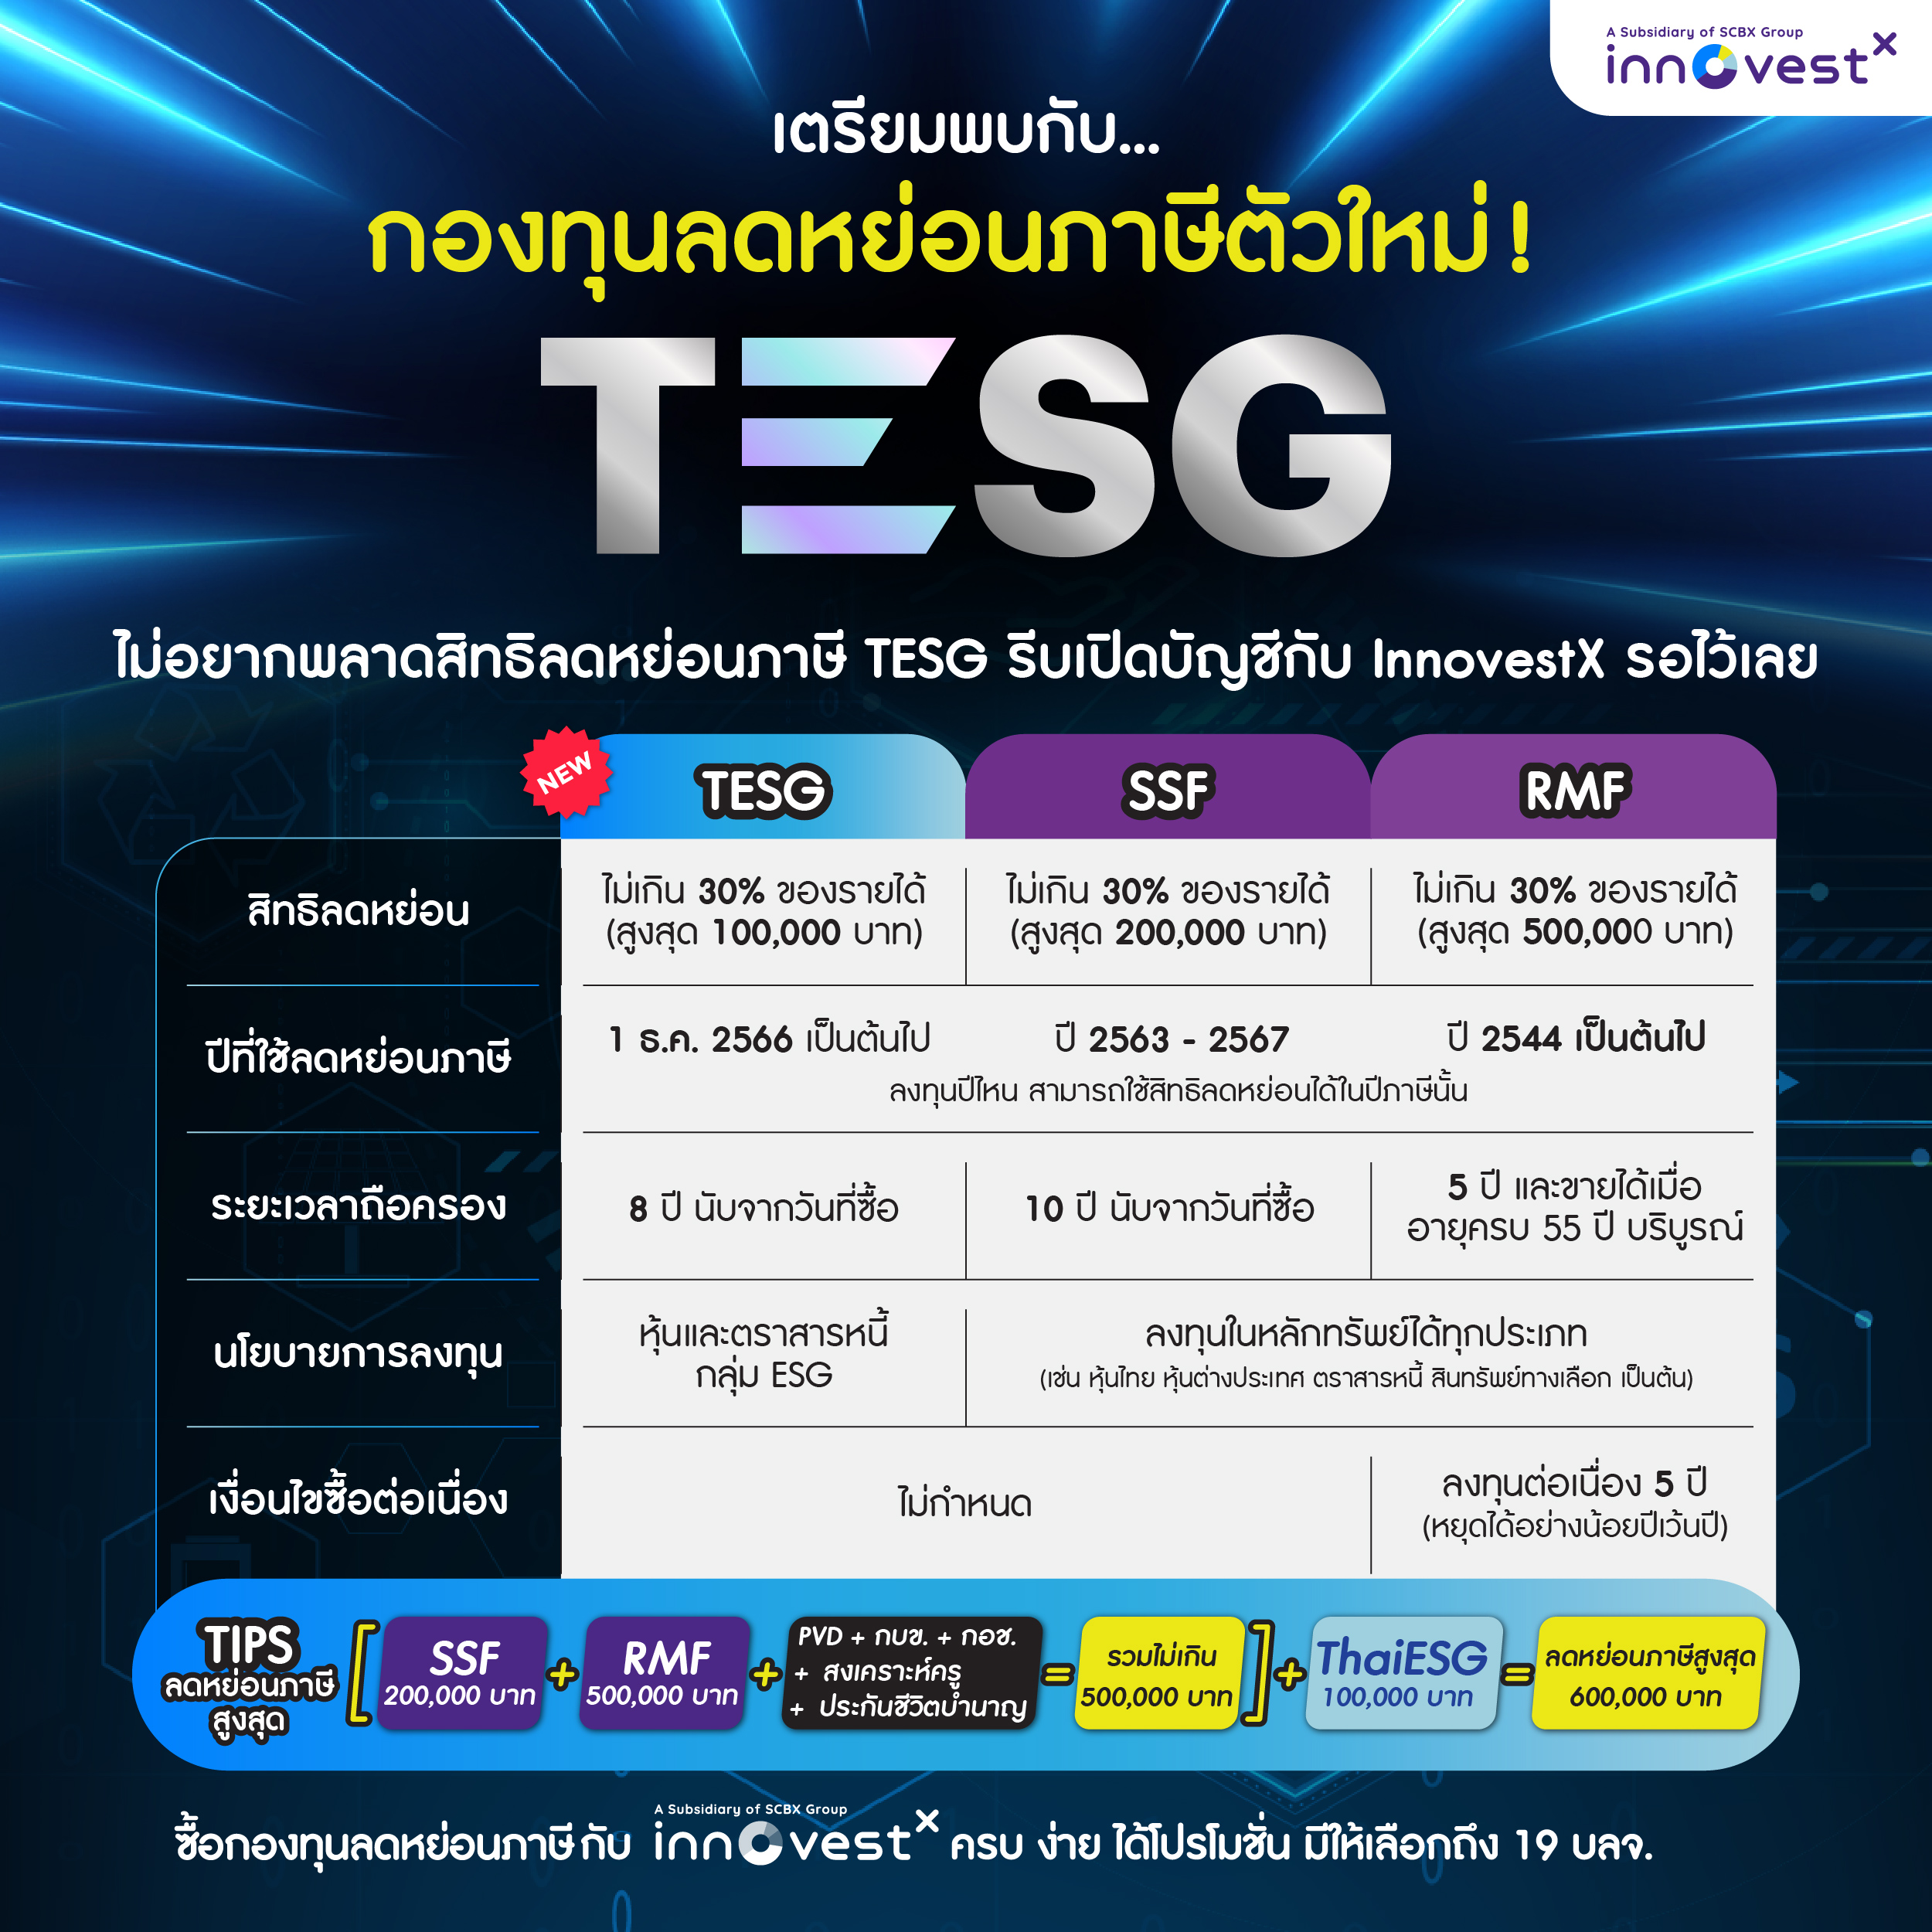 Thai ESG Fund